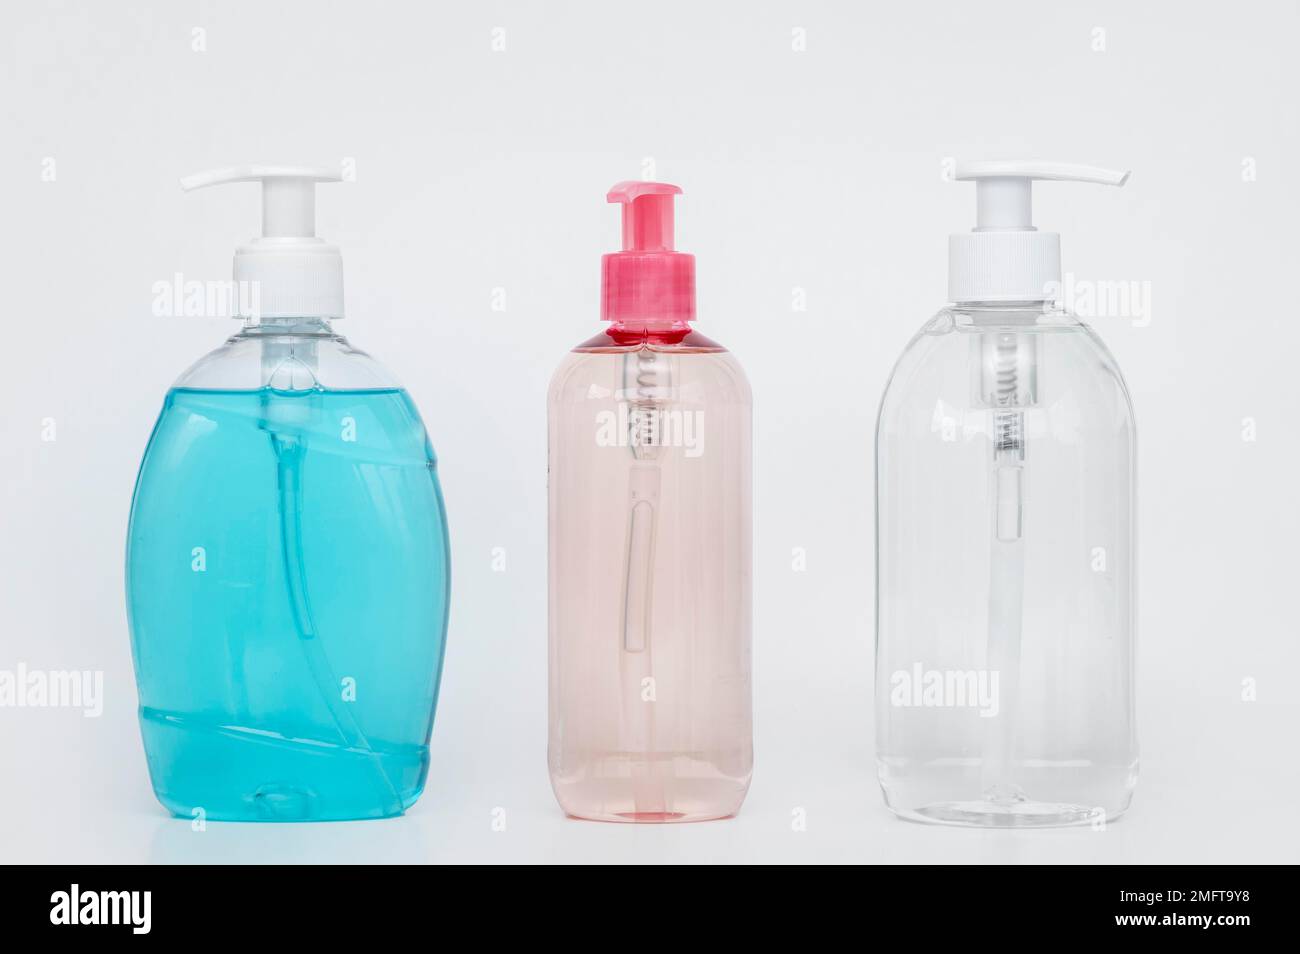 https://c8.alamy.com/comp/2MFT9Y8/collection-different-bottles-liquid-soap-high-resolution-photo-2MFT9Y8.jpg